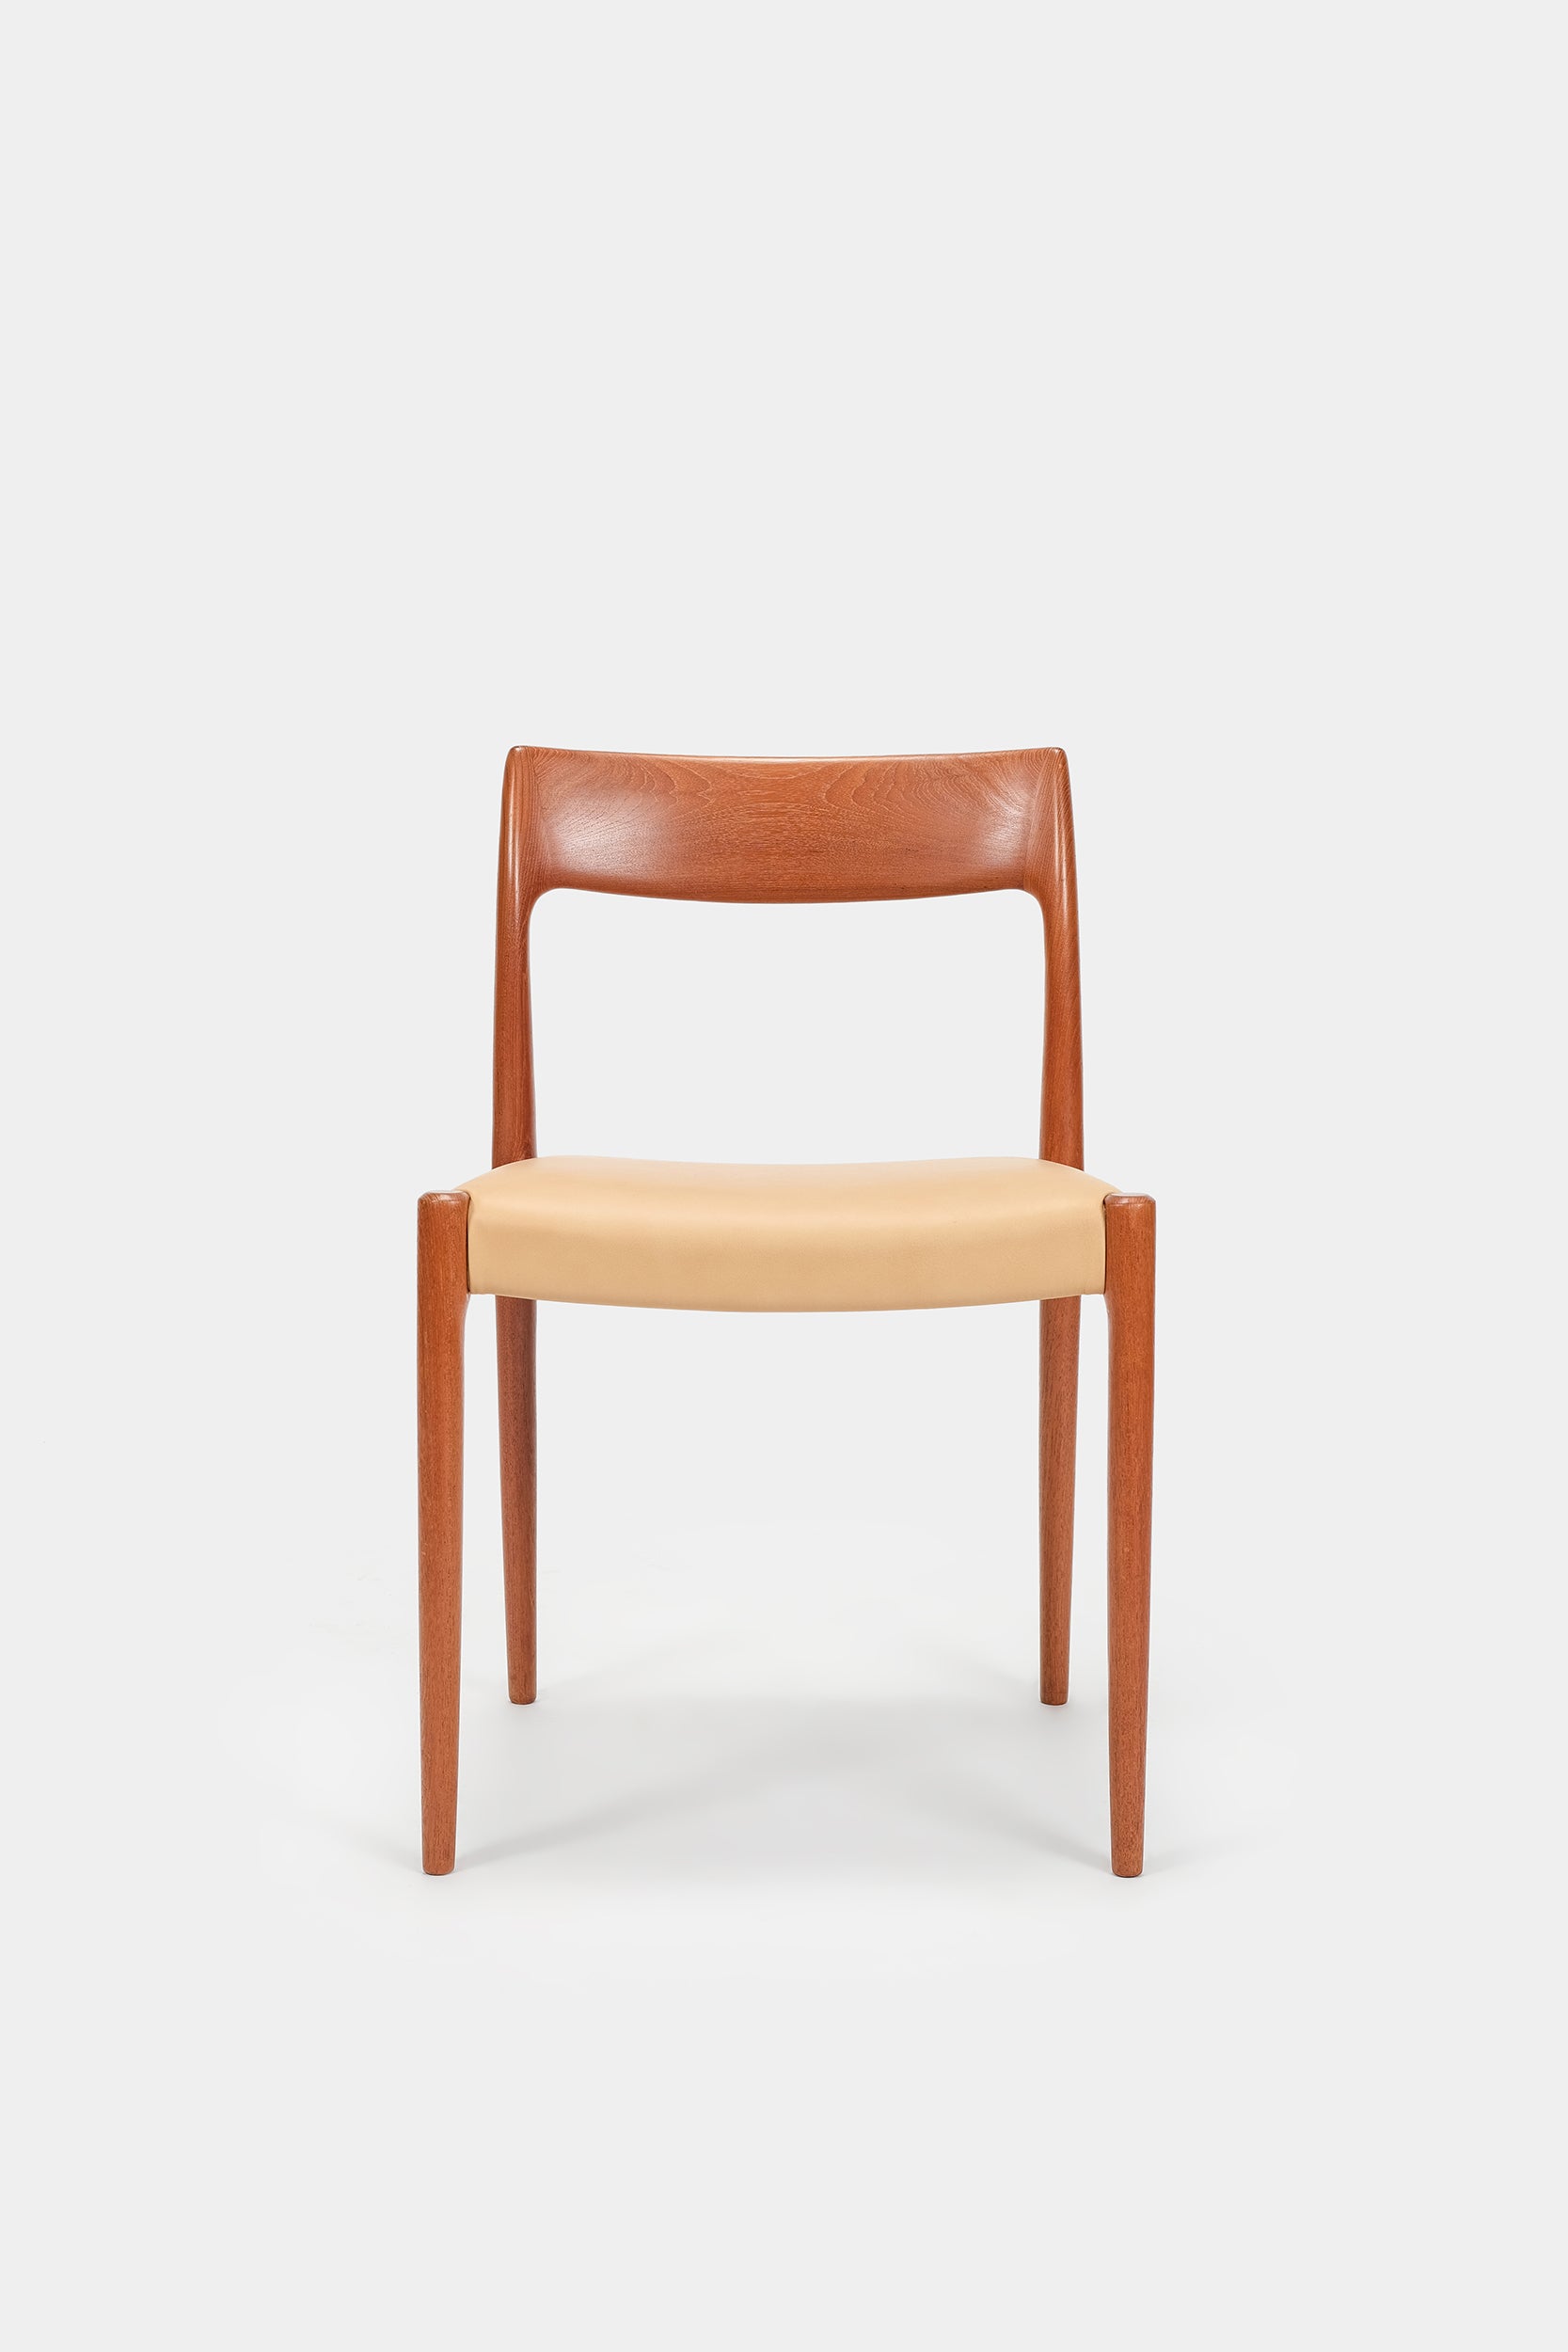 Nils Otto Moeller, 4 Chairs Model 77, Denmark, 60s